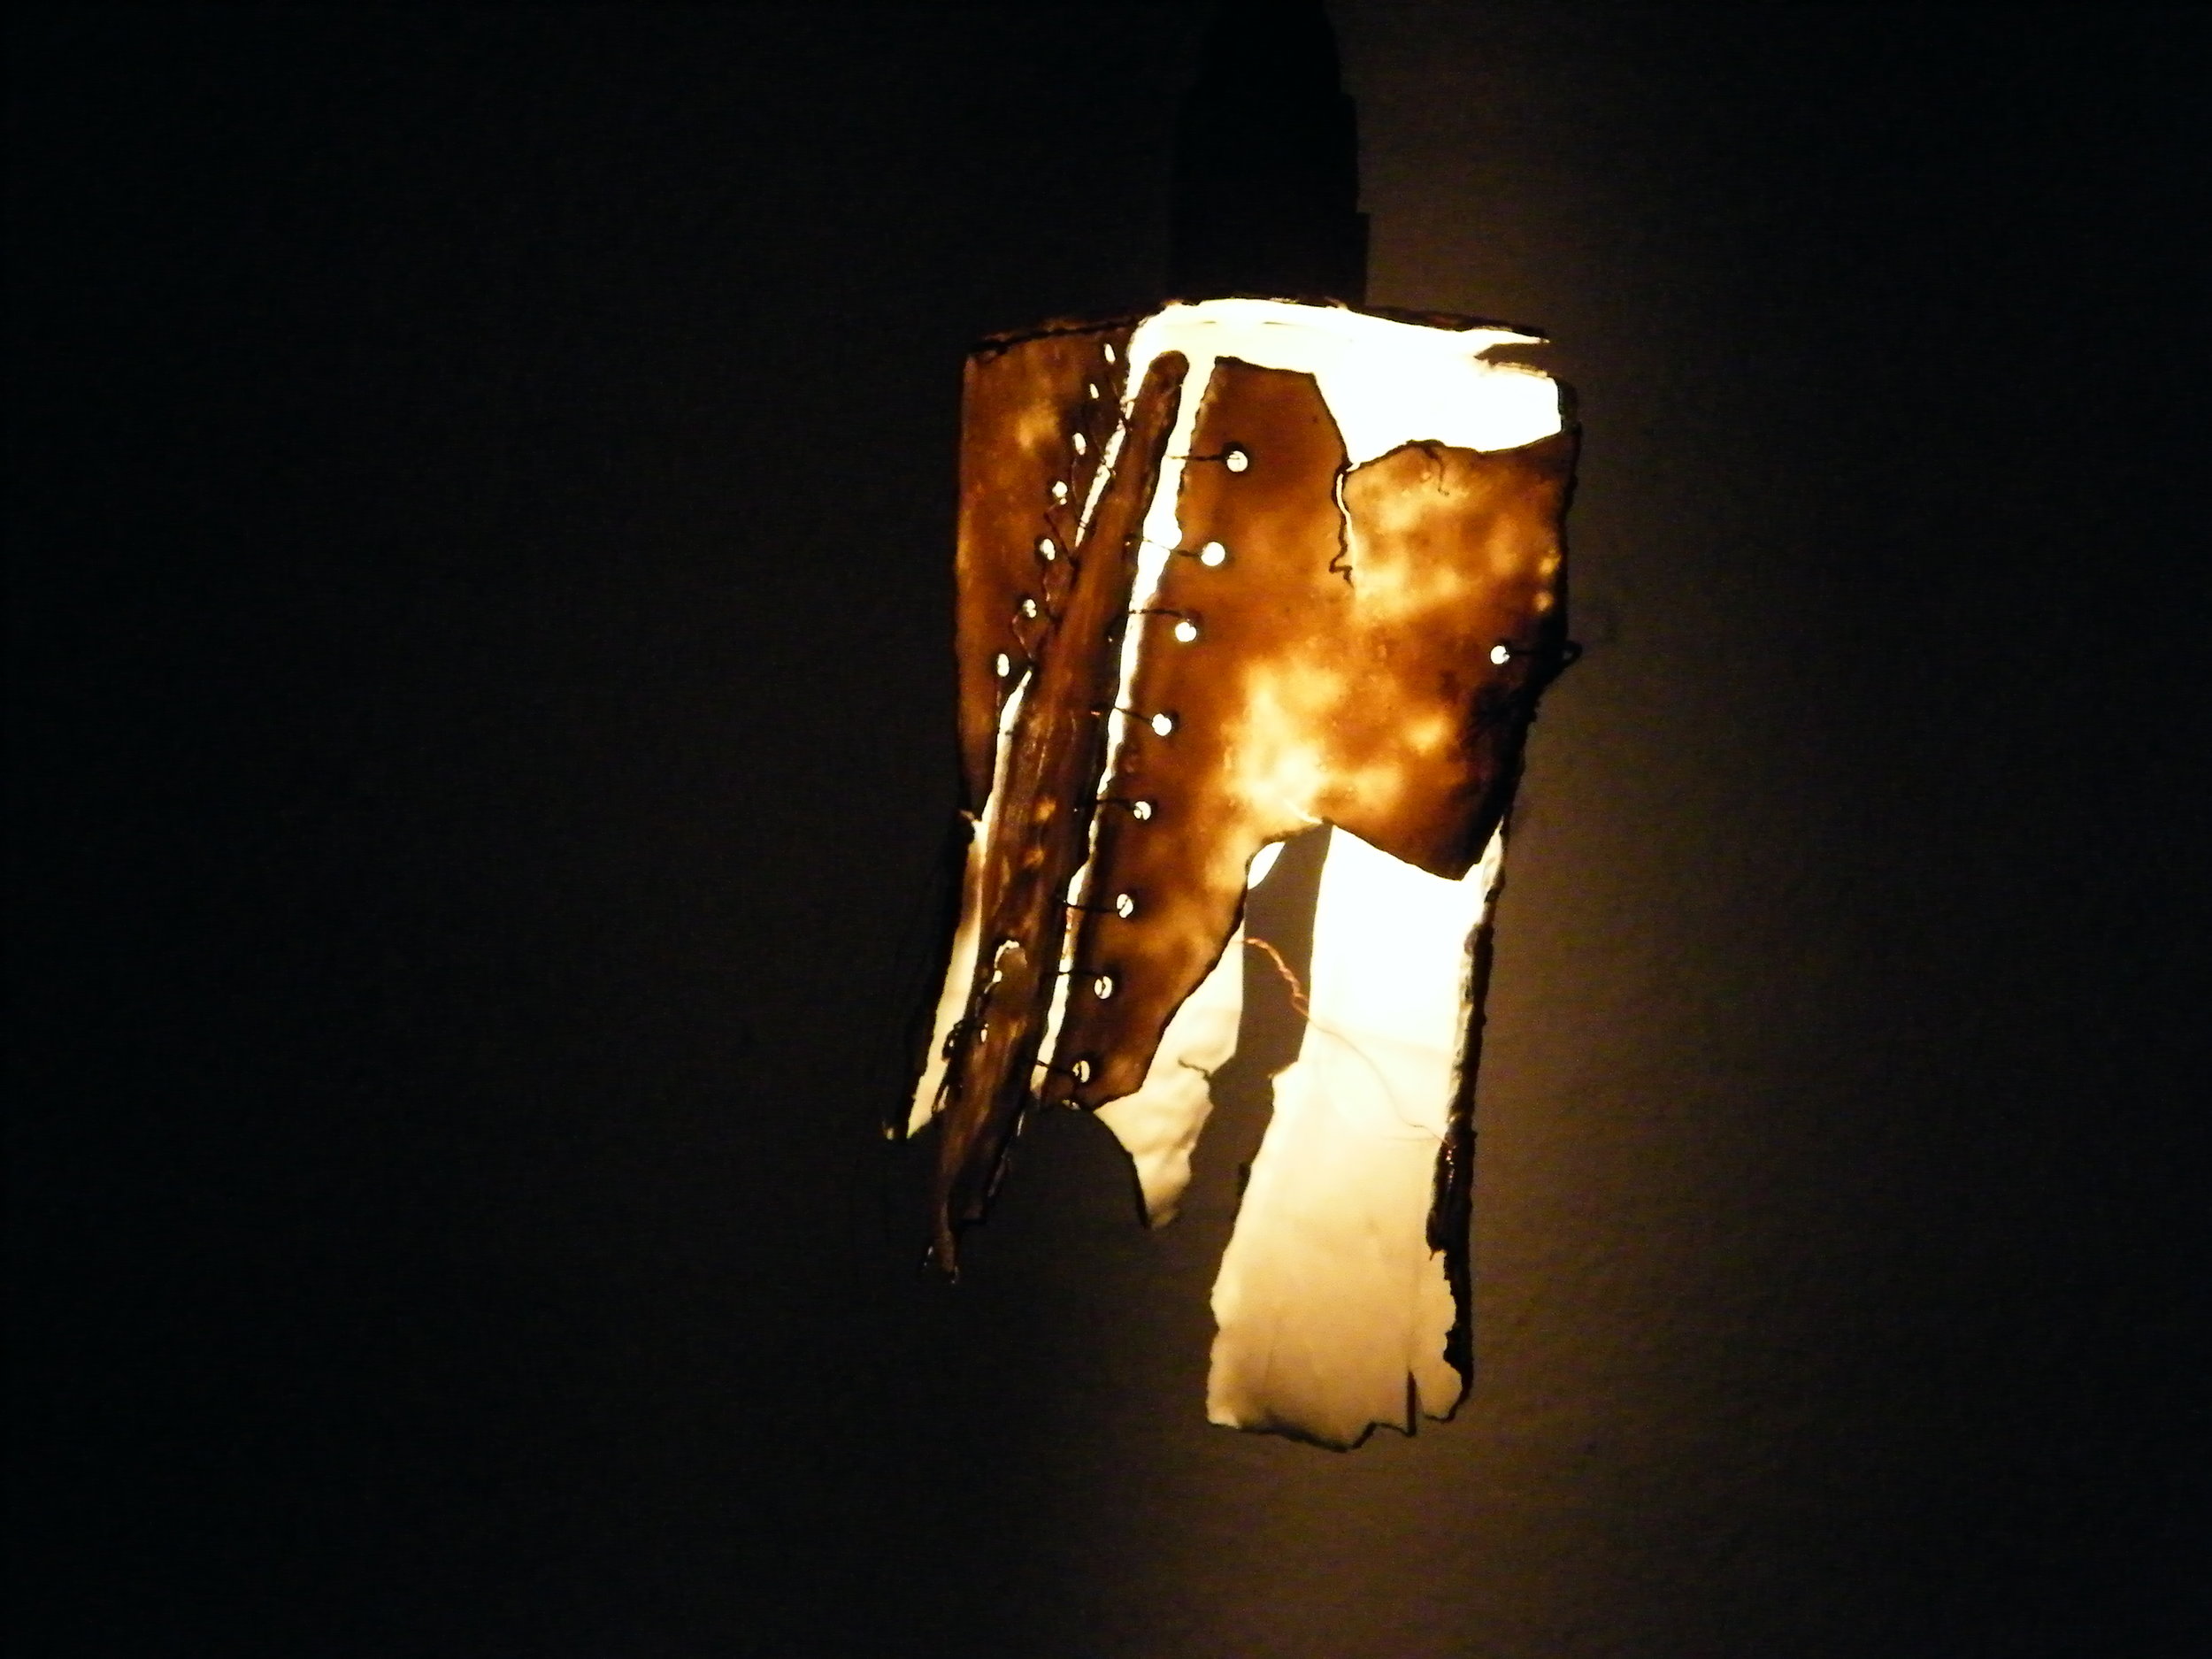 Stitches in Light, porcelain, lighting system, copper, 2008 (2).JPG